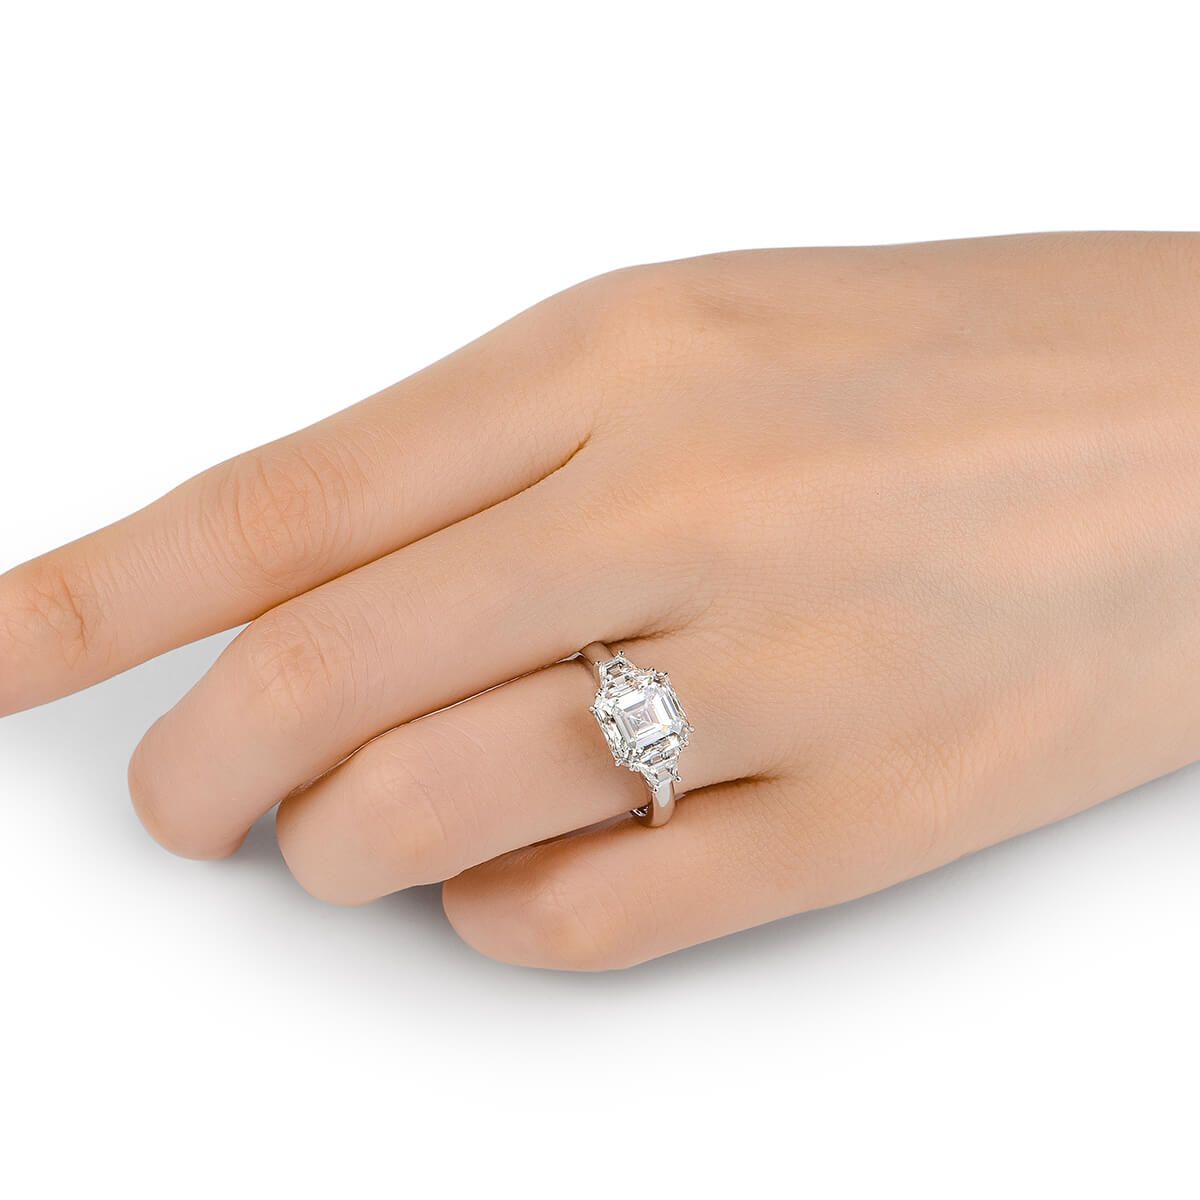  White Diamond Ring, 3.58 Ct. TW, Asscher shape, GIA Certified, 1182720903